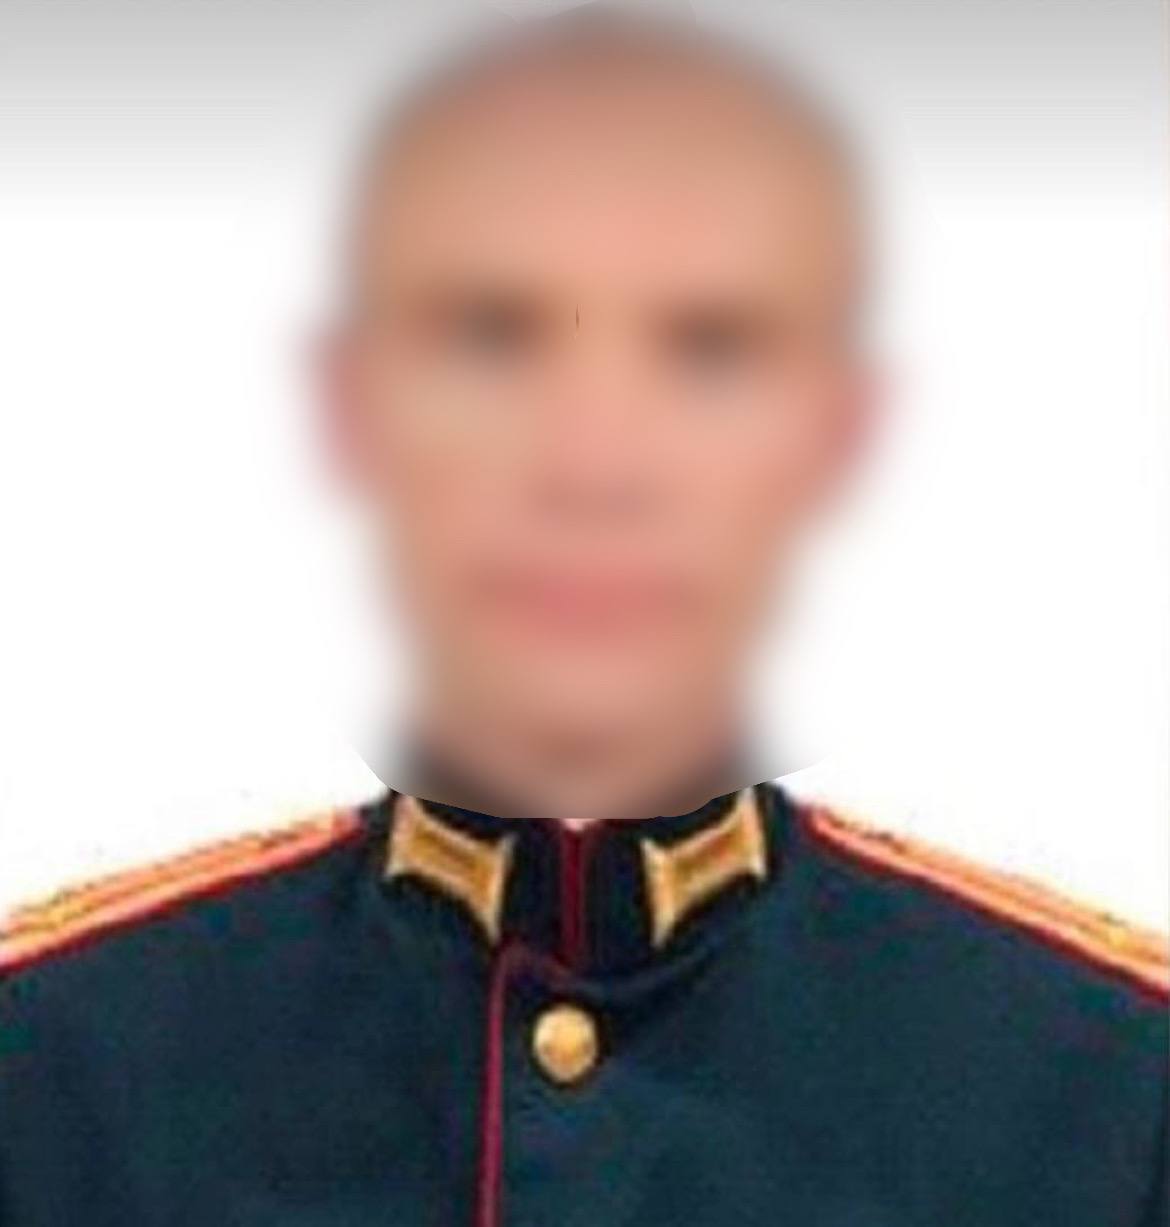 Российскому командиру заочно объявили о подозрении